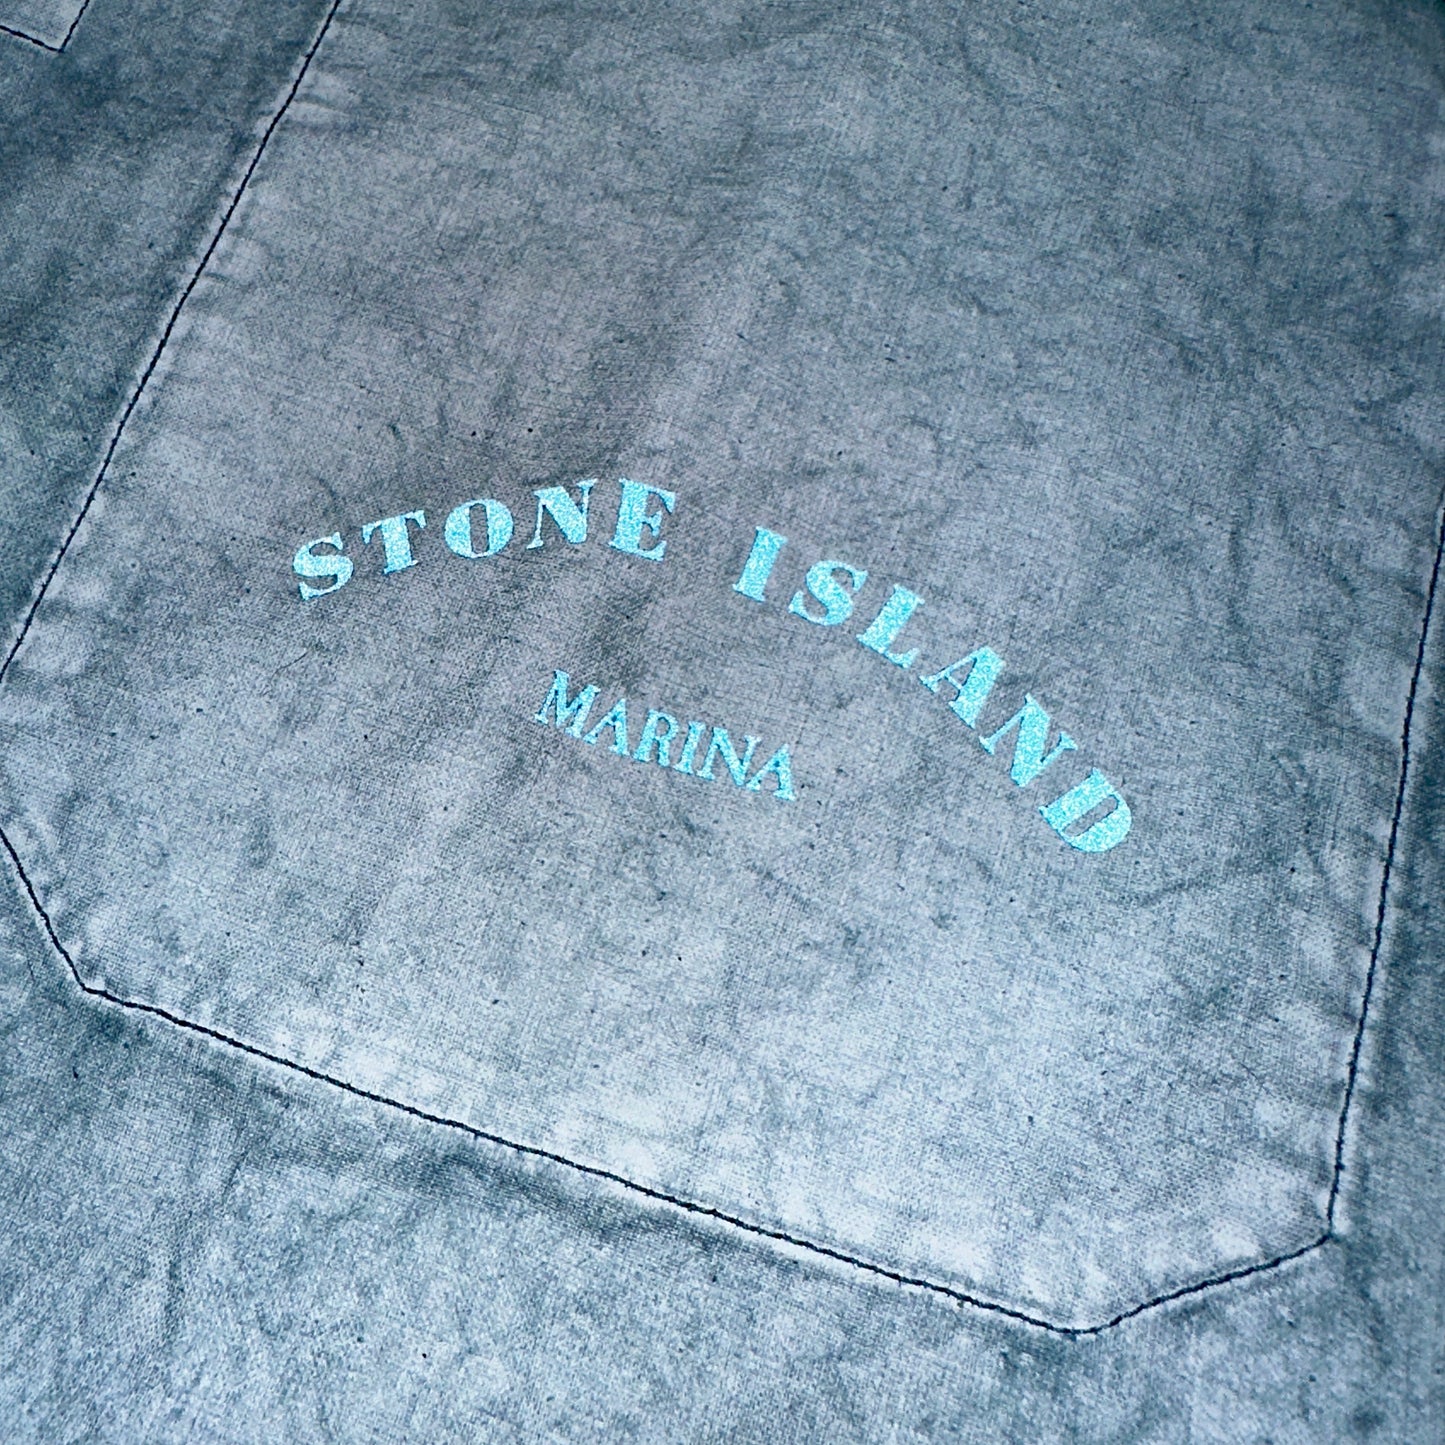 Stone Island Marina 2023 Reflective Print Overshirt Polo Blue - M - Made in Italy